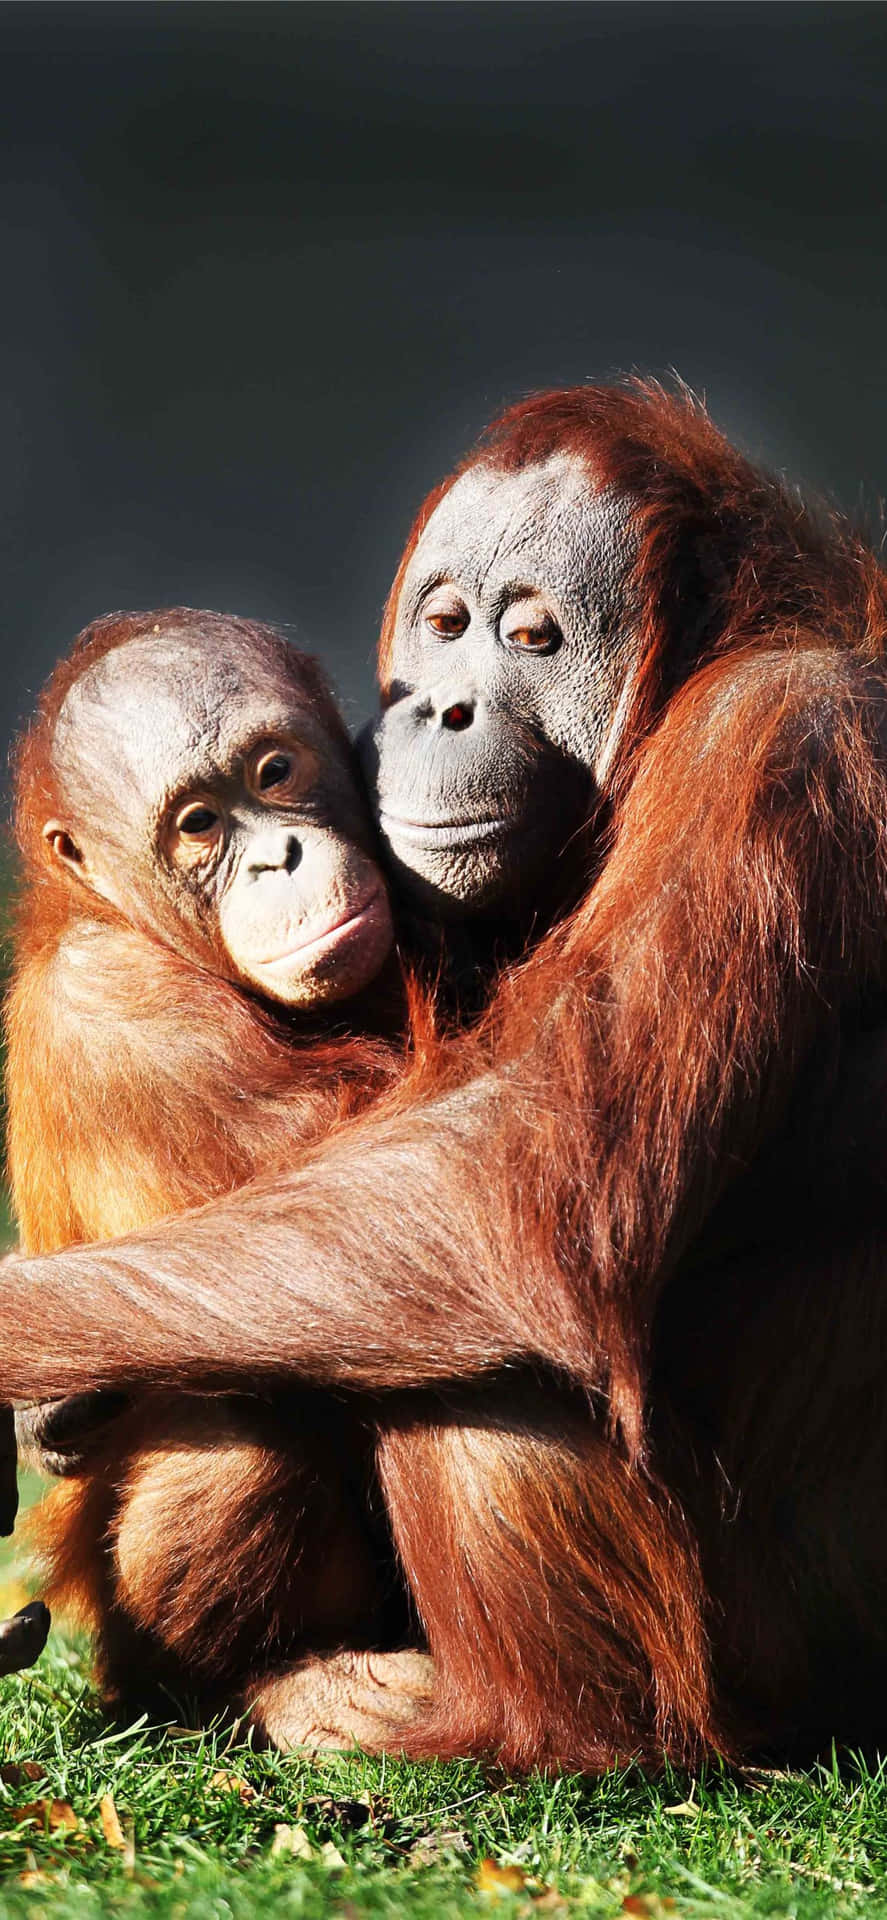 Orangutan, Die Sich Umarmen Wallpaper